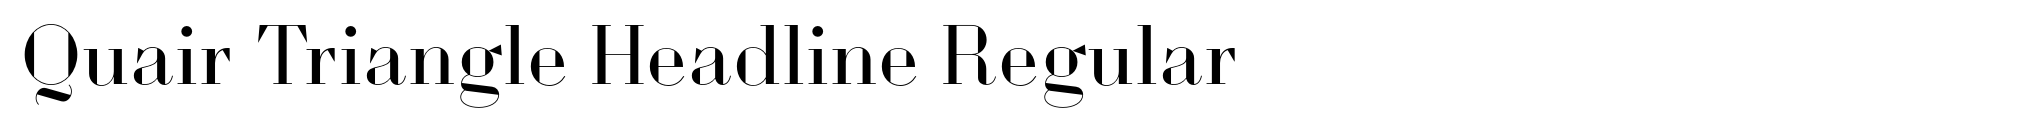 Quair Triangle Headline Regular image